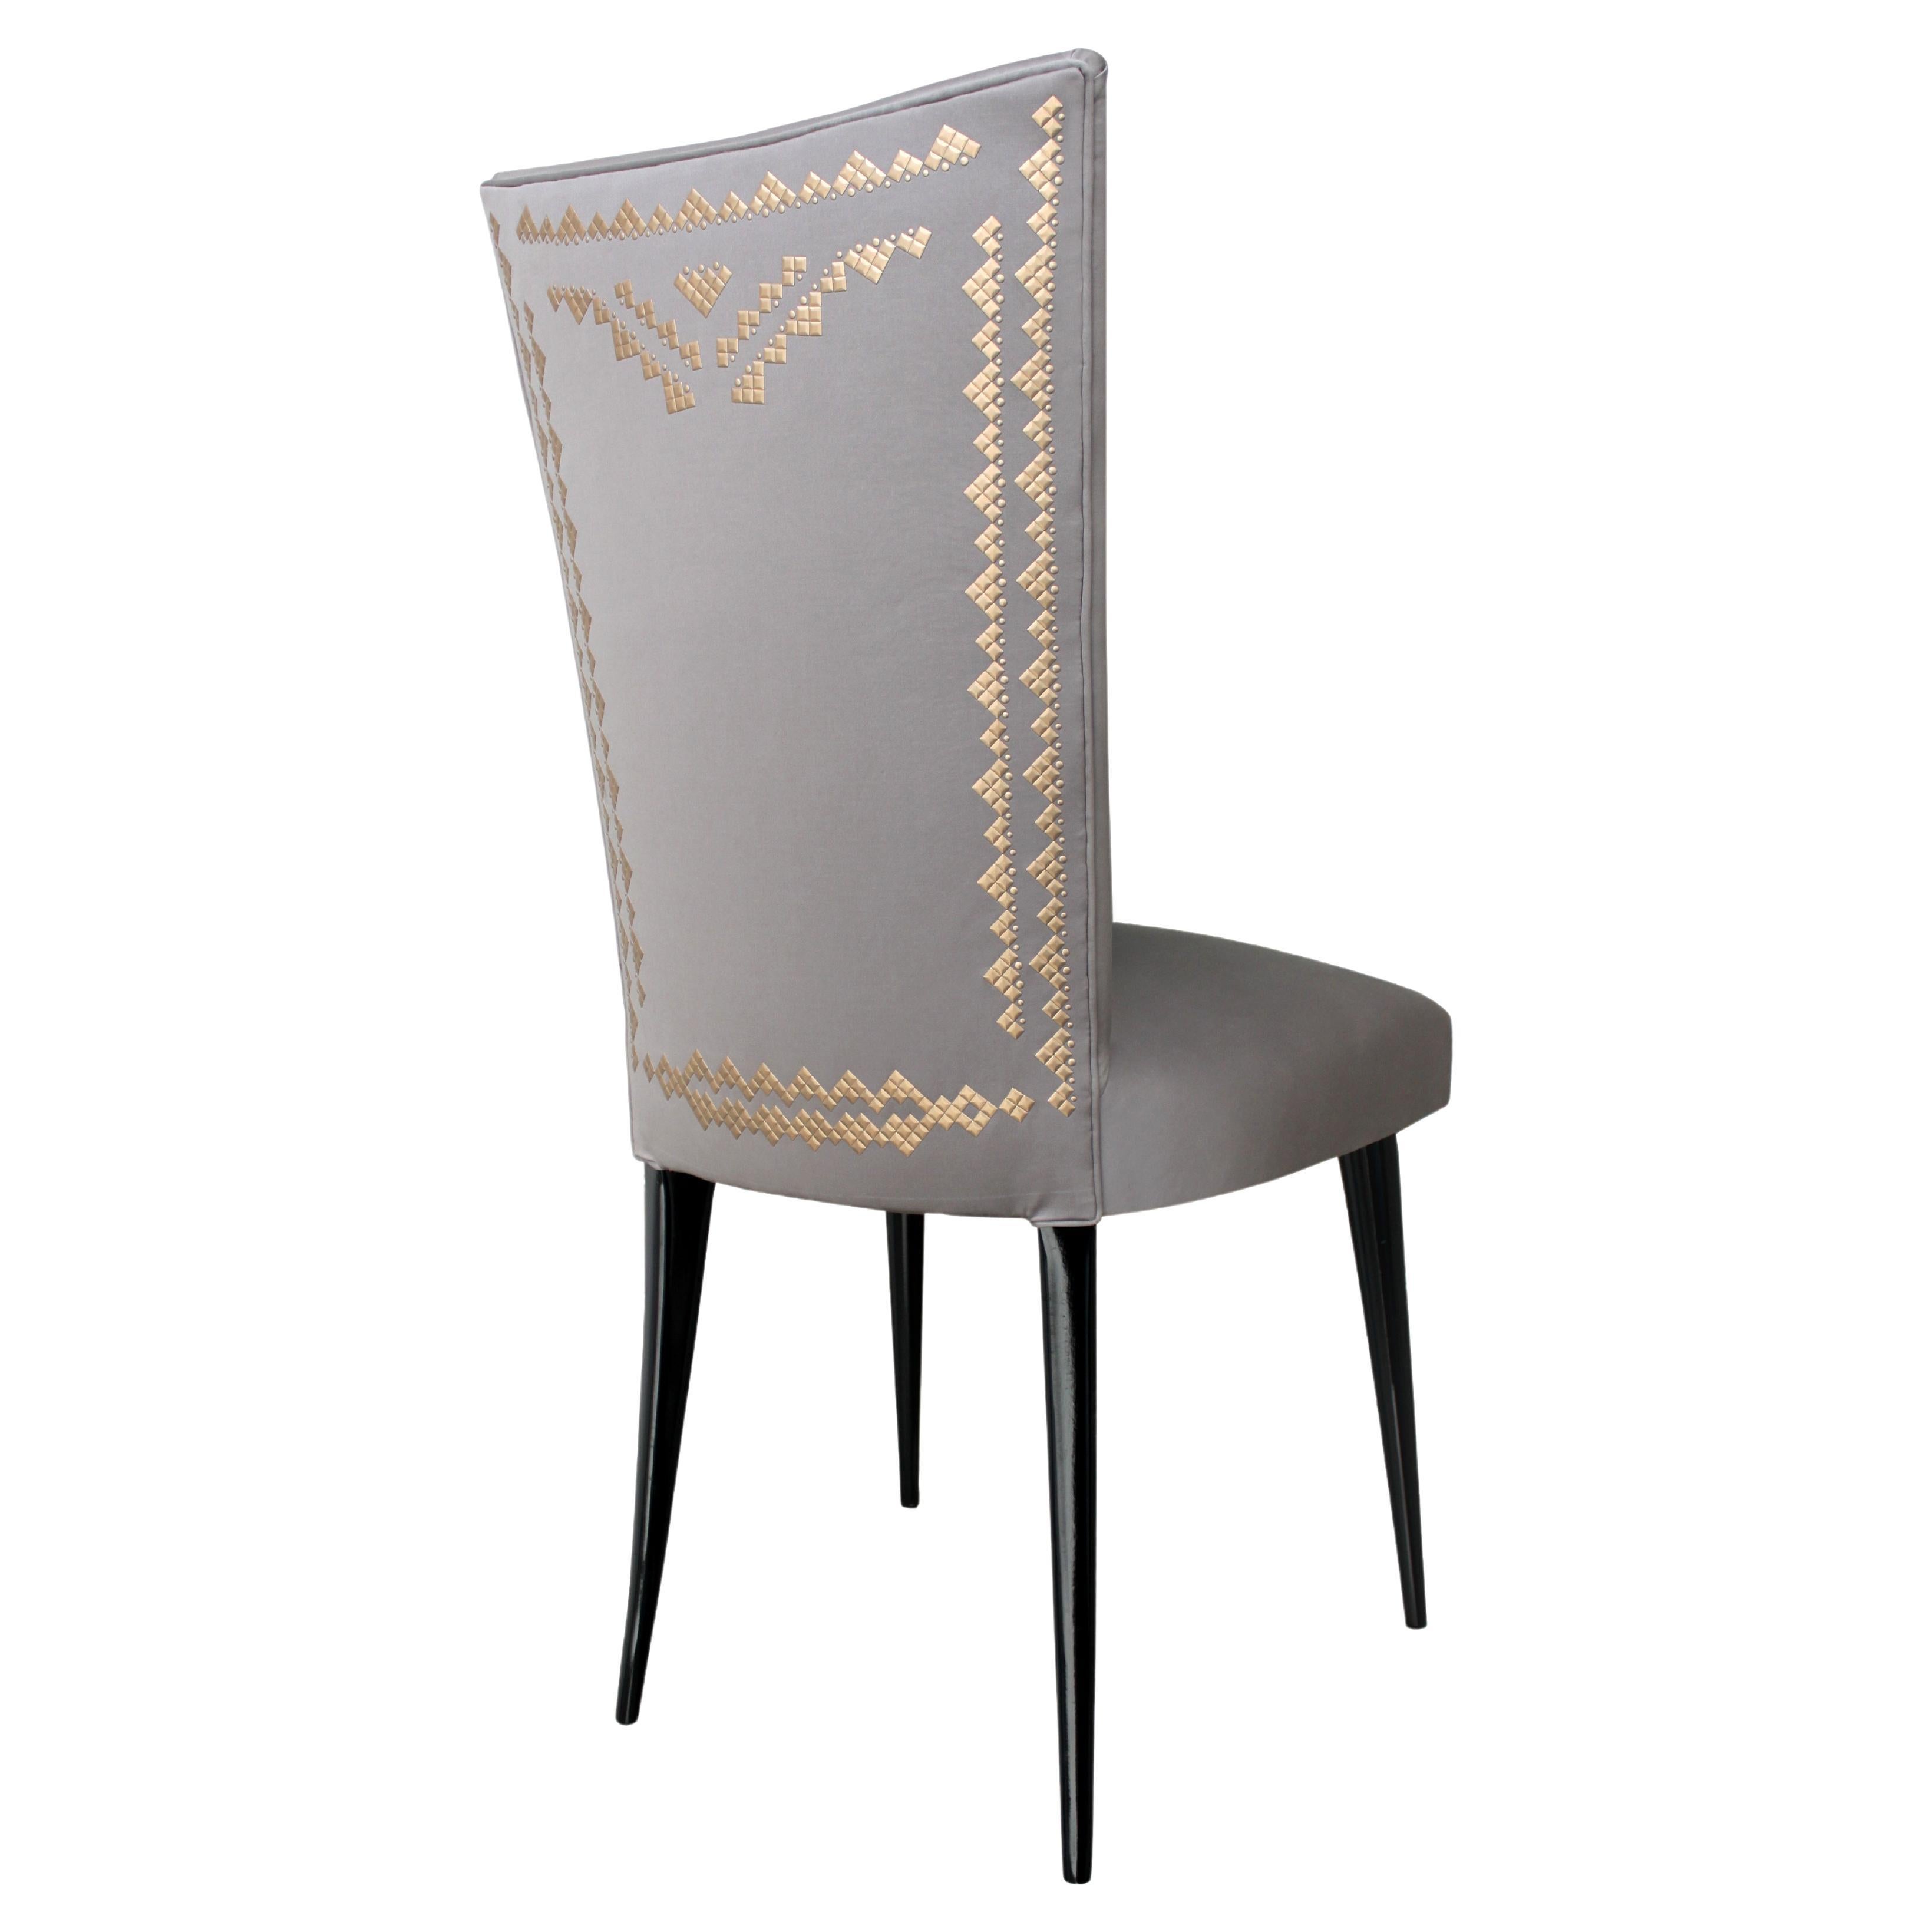 Aiveen Daly Navaho Stiletto Chair 